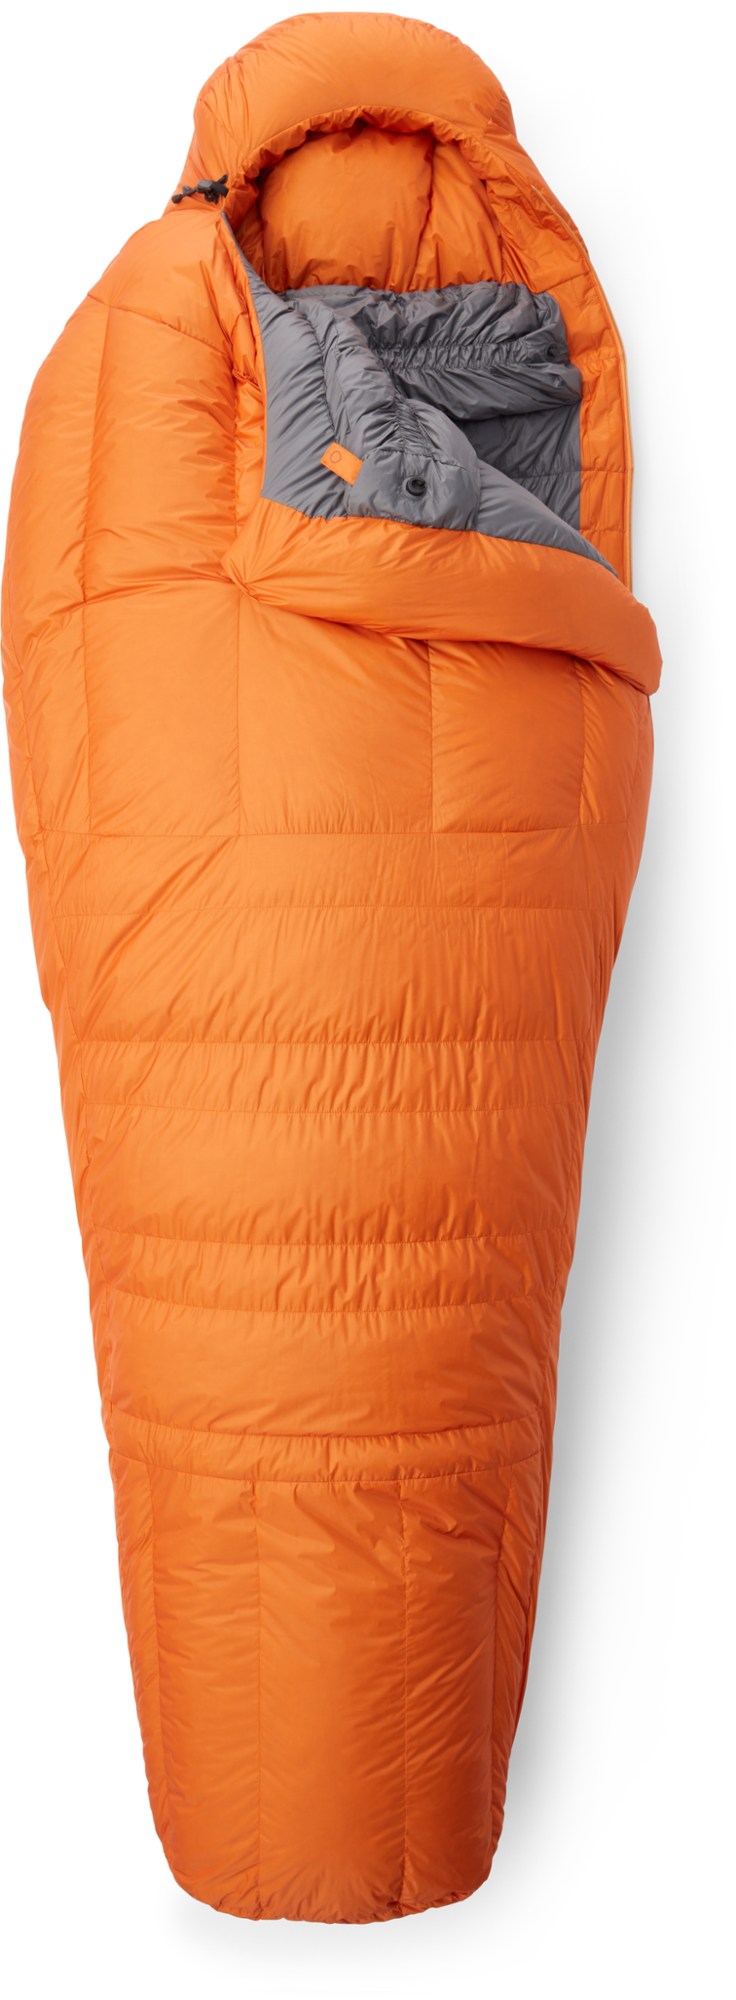 Спальный мешок Snowline Mountain Equipment, желтый спальный мешок чайка large250